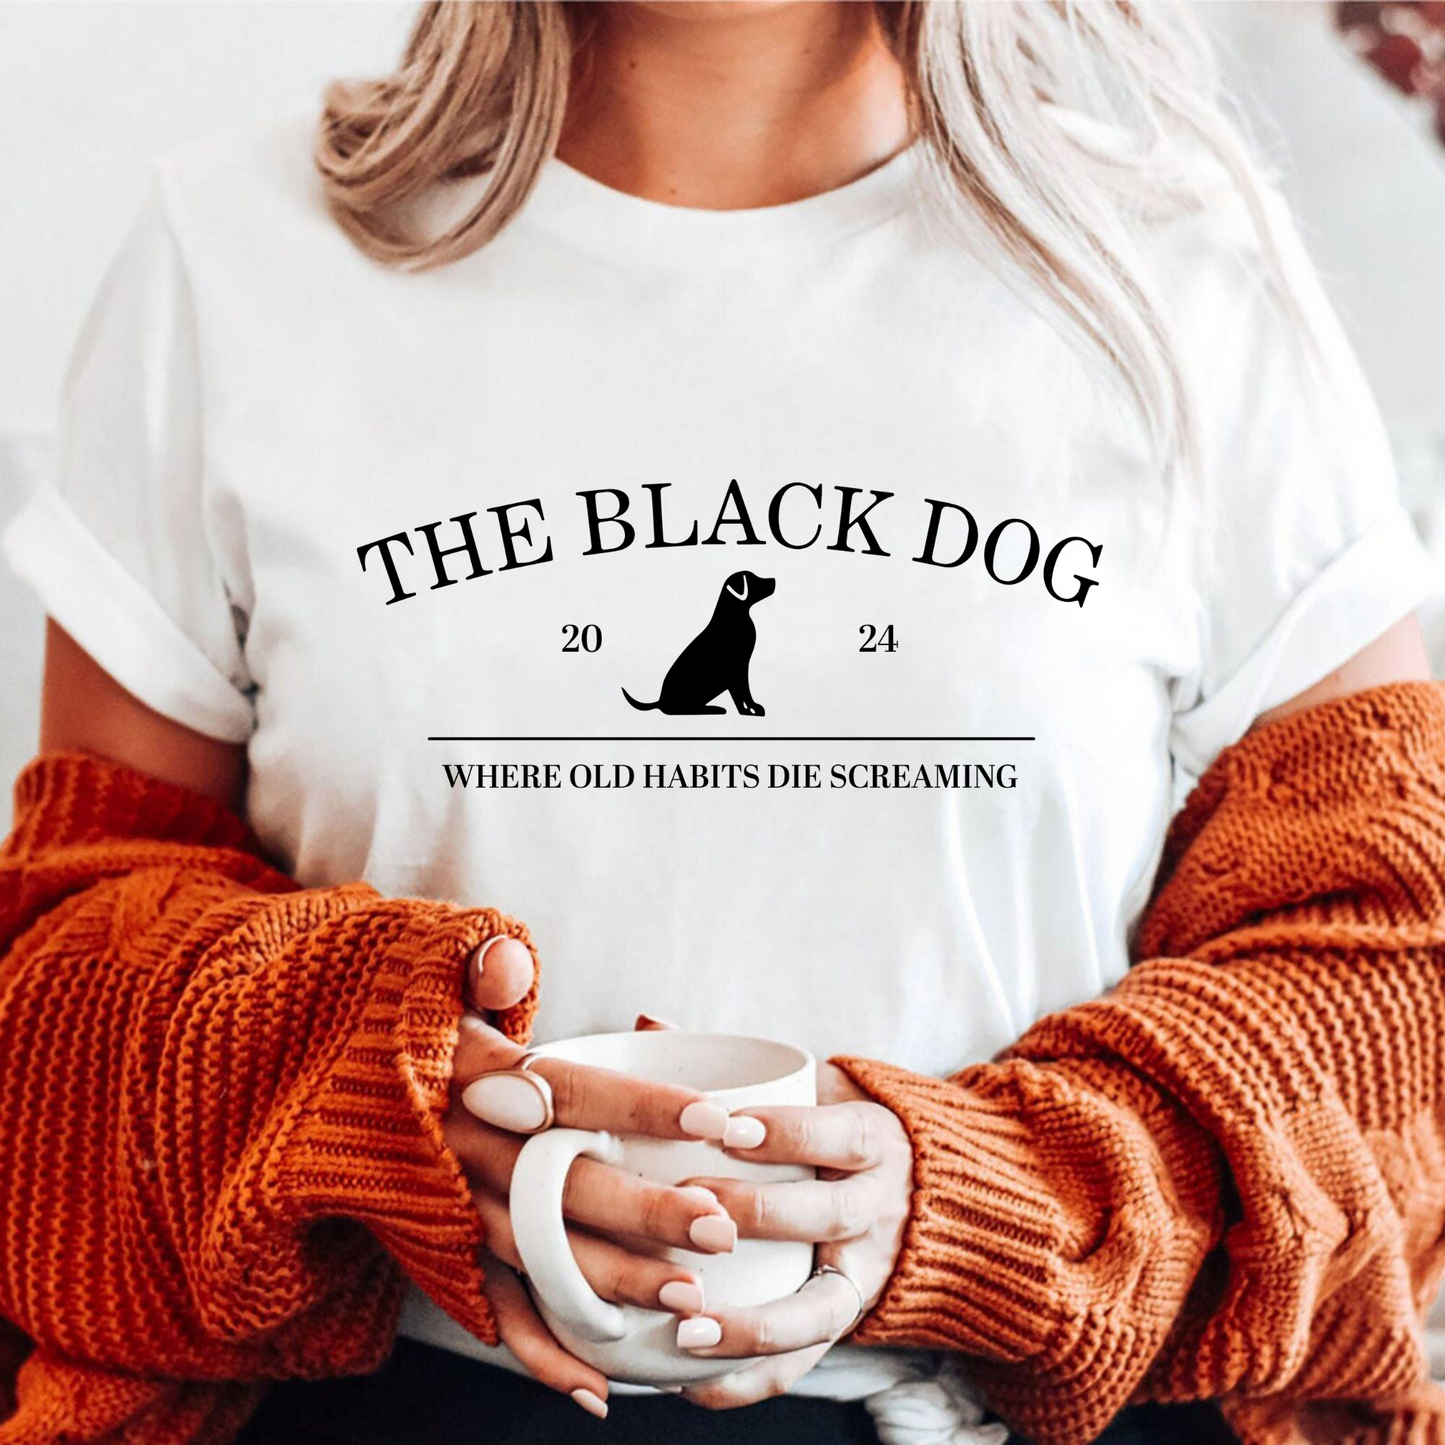 The Black Dog T-Shirt